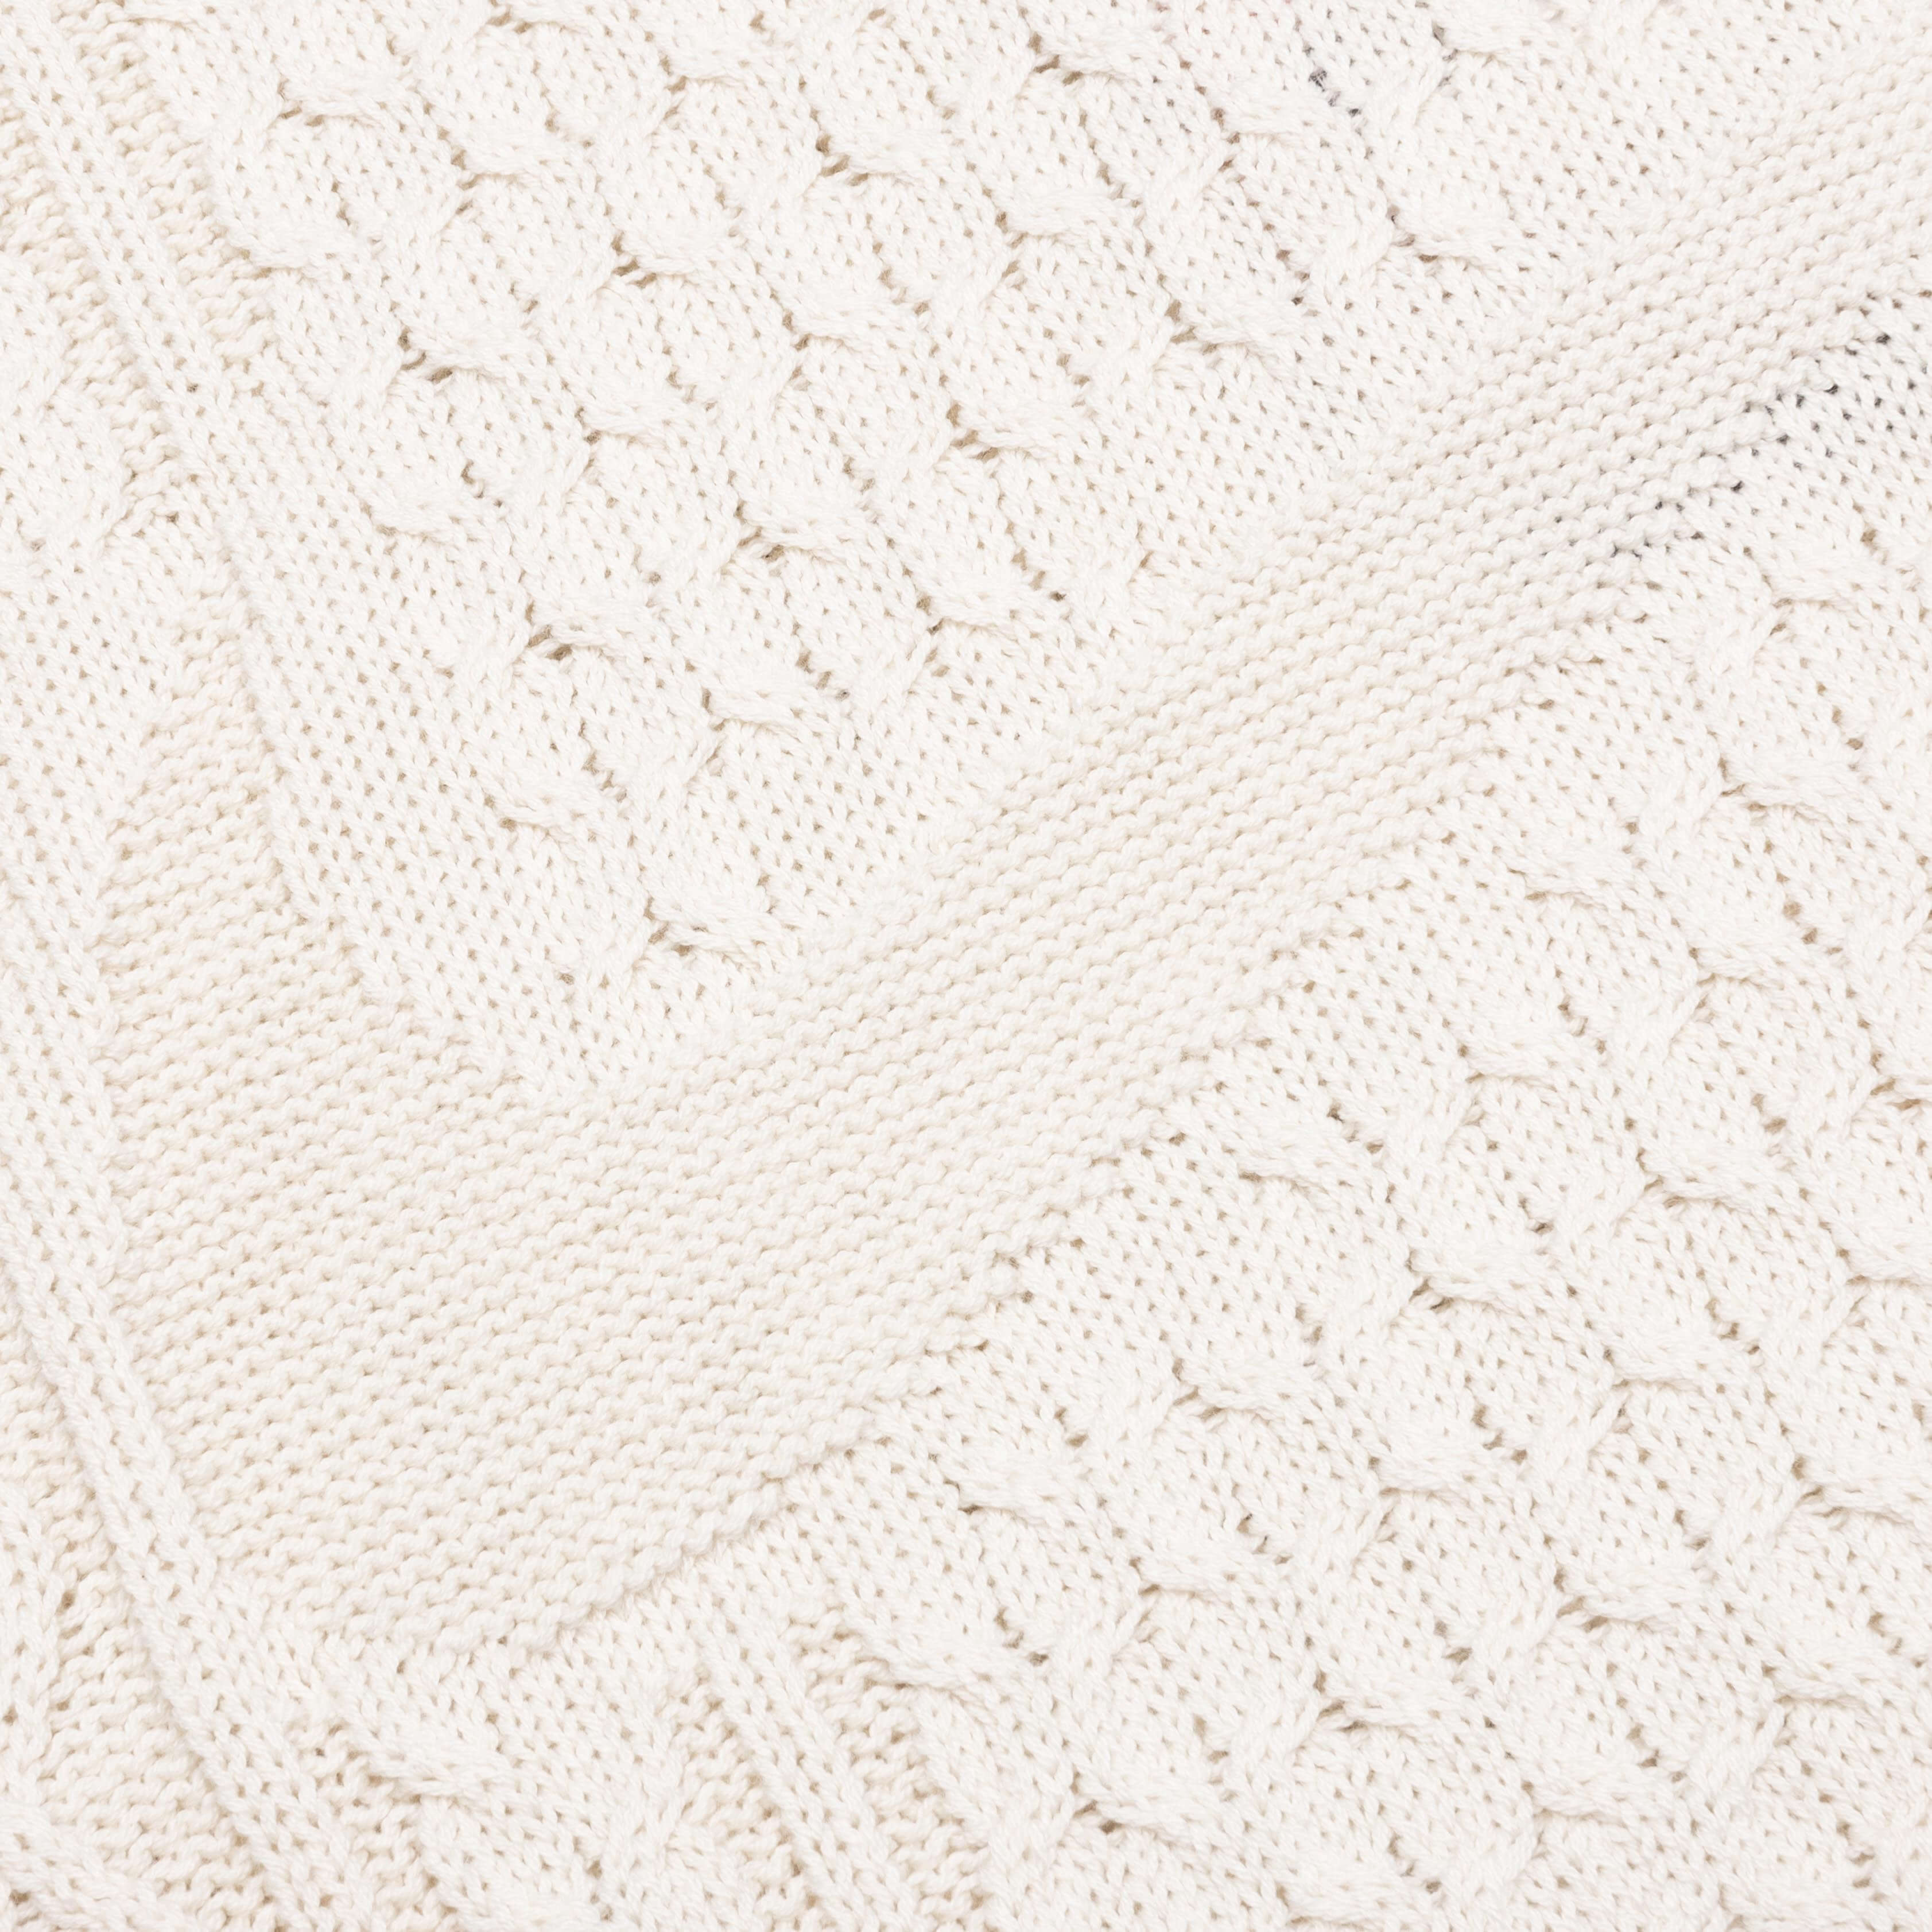 Nike Life Cable Knit Turtleneck Sweater - Light Bone, , large image number null